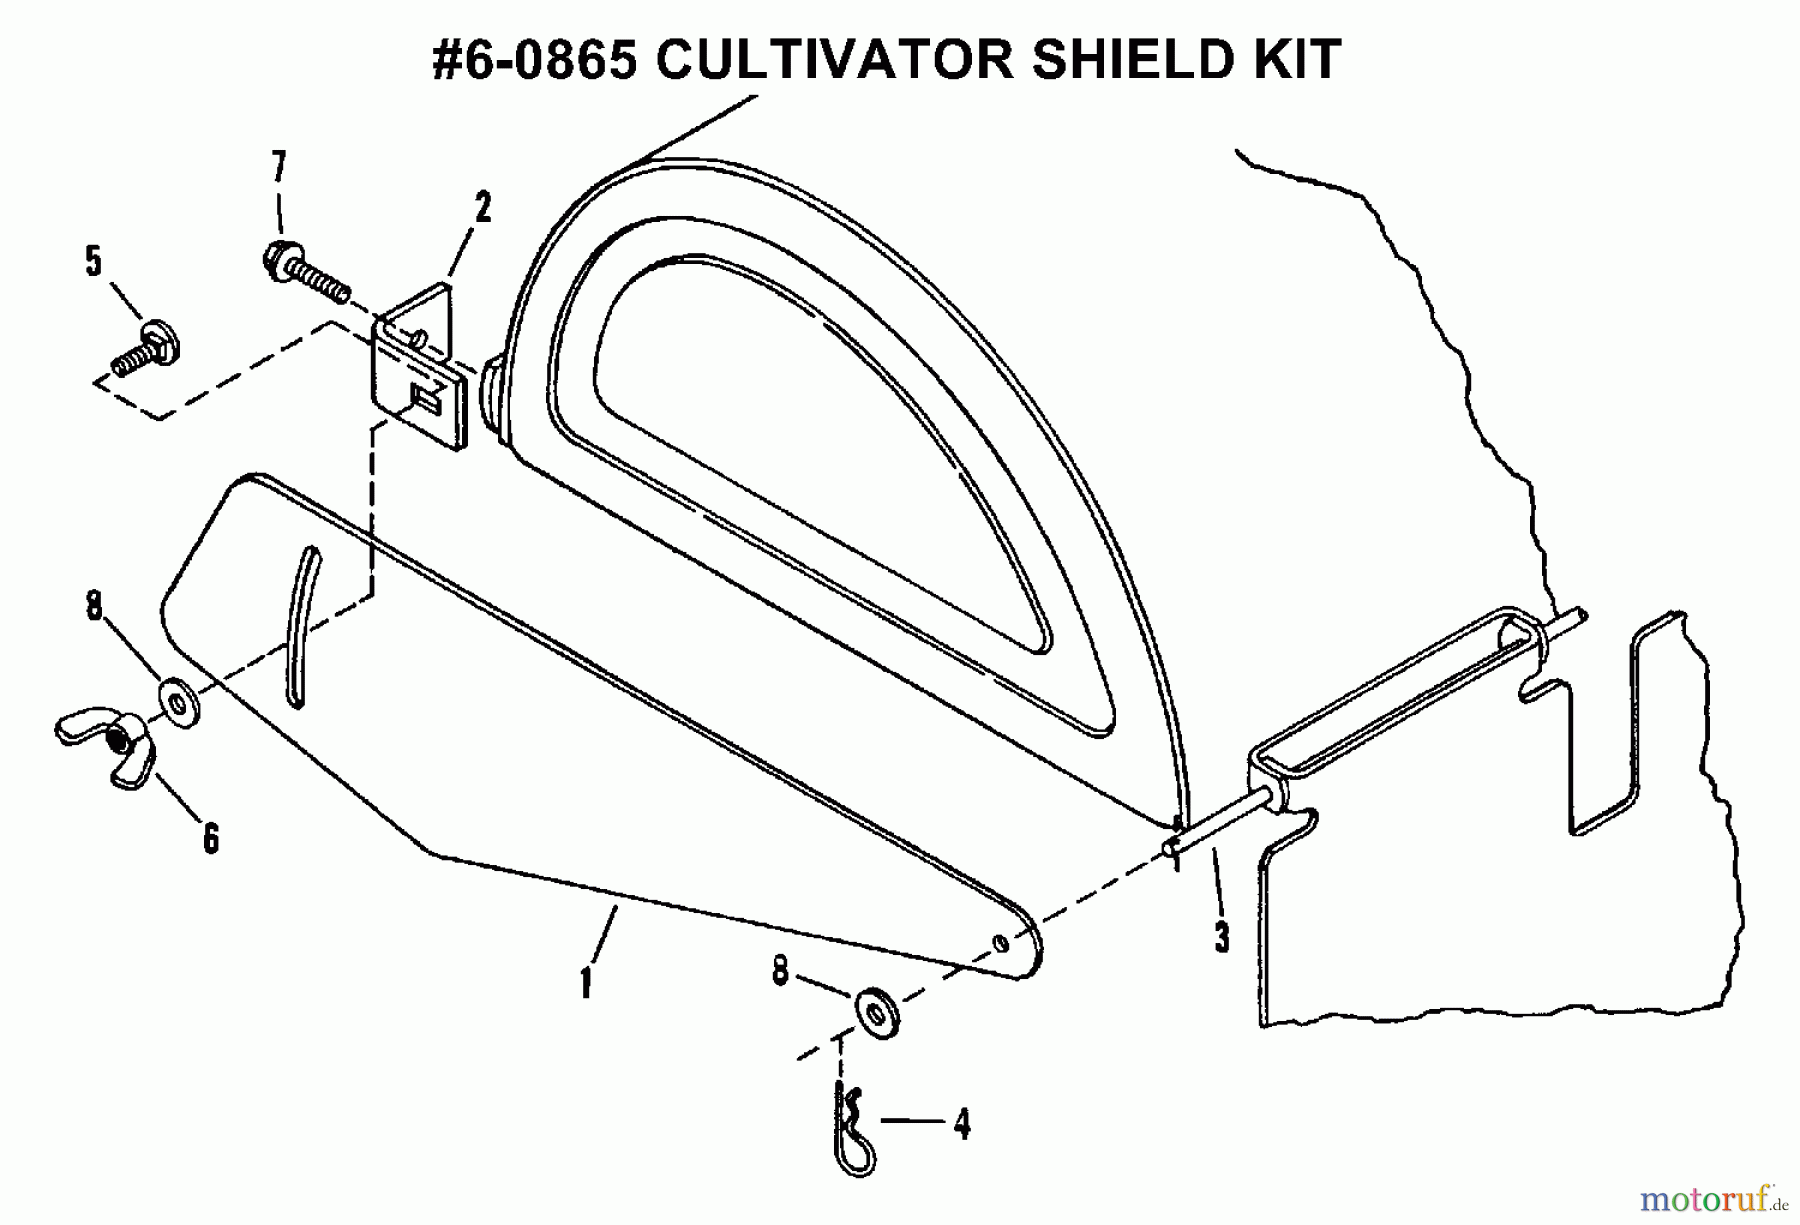  Snapper Motorhacken und Kultivierer IR4000 (85328) - Snapper Accessory - Cultivator Shield Kit